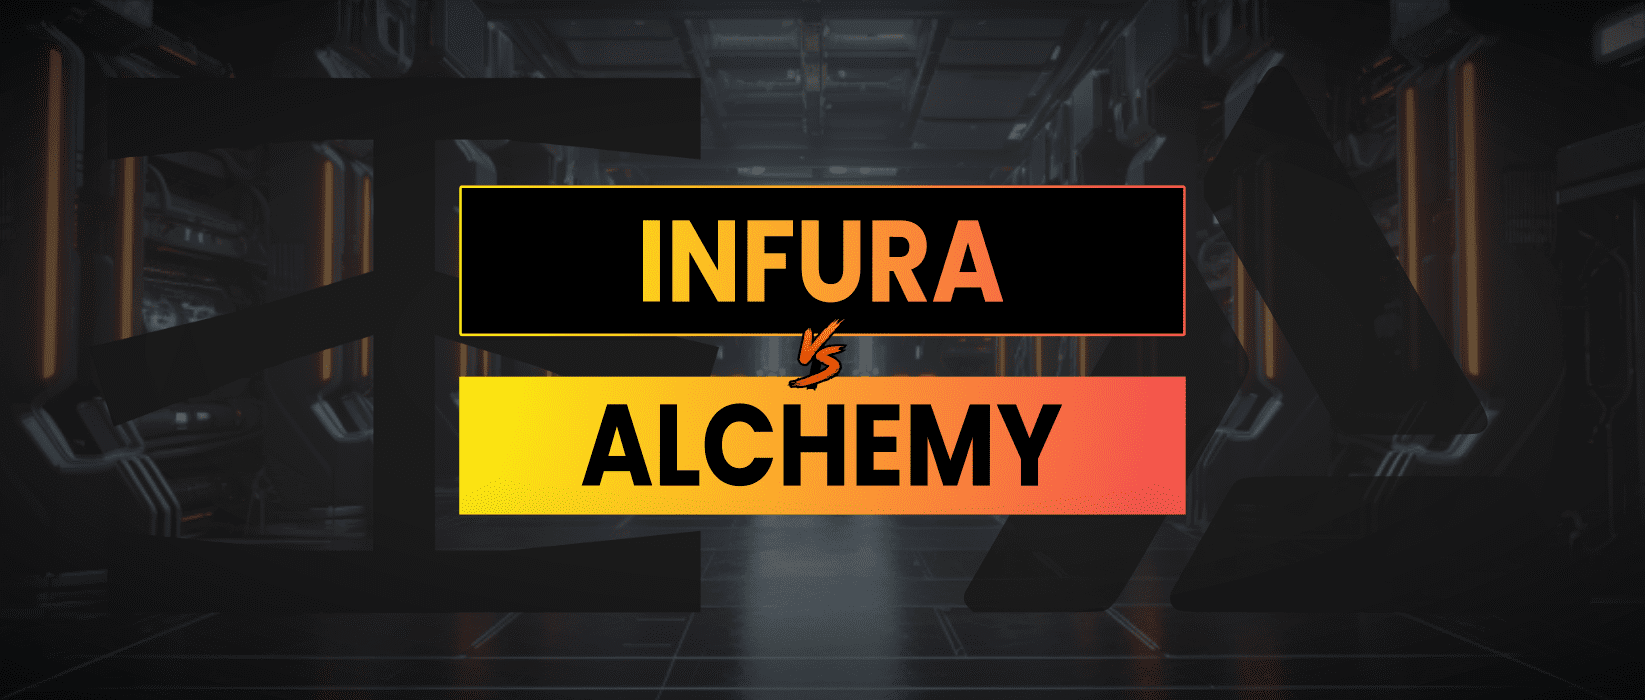 Infura vs Alchemy